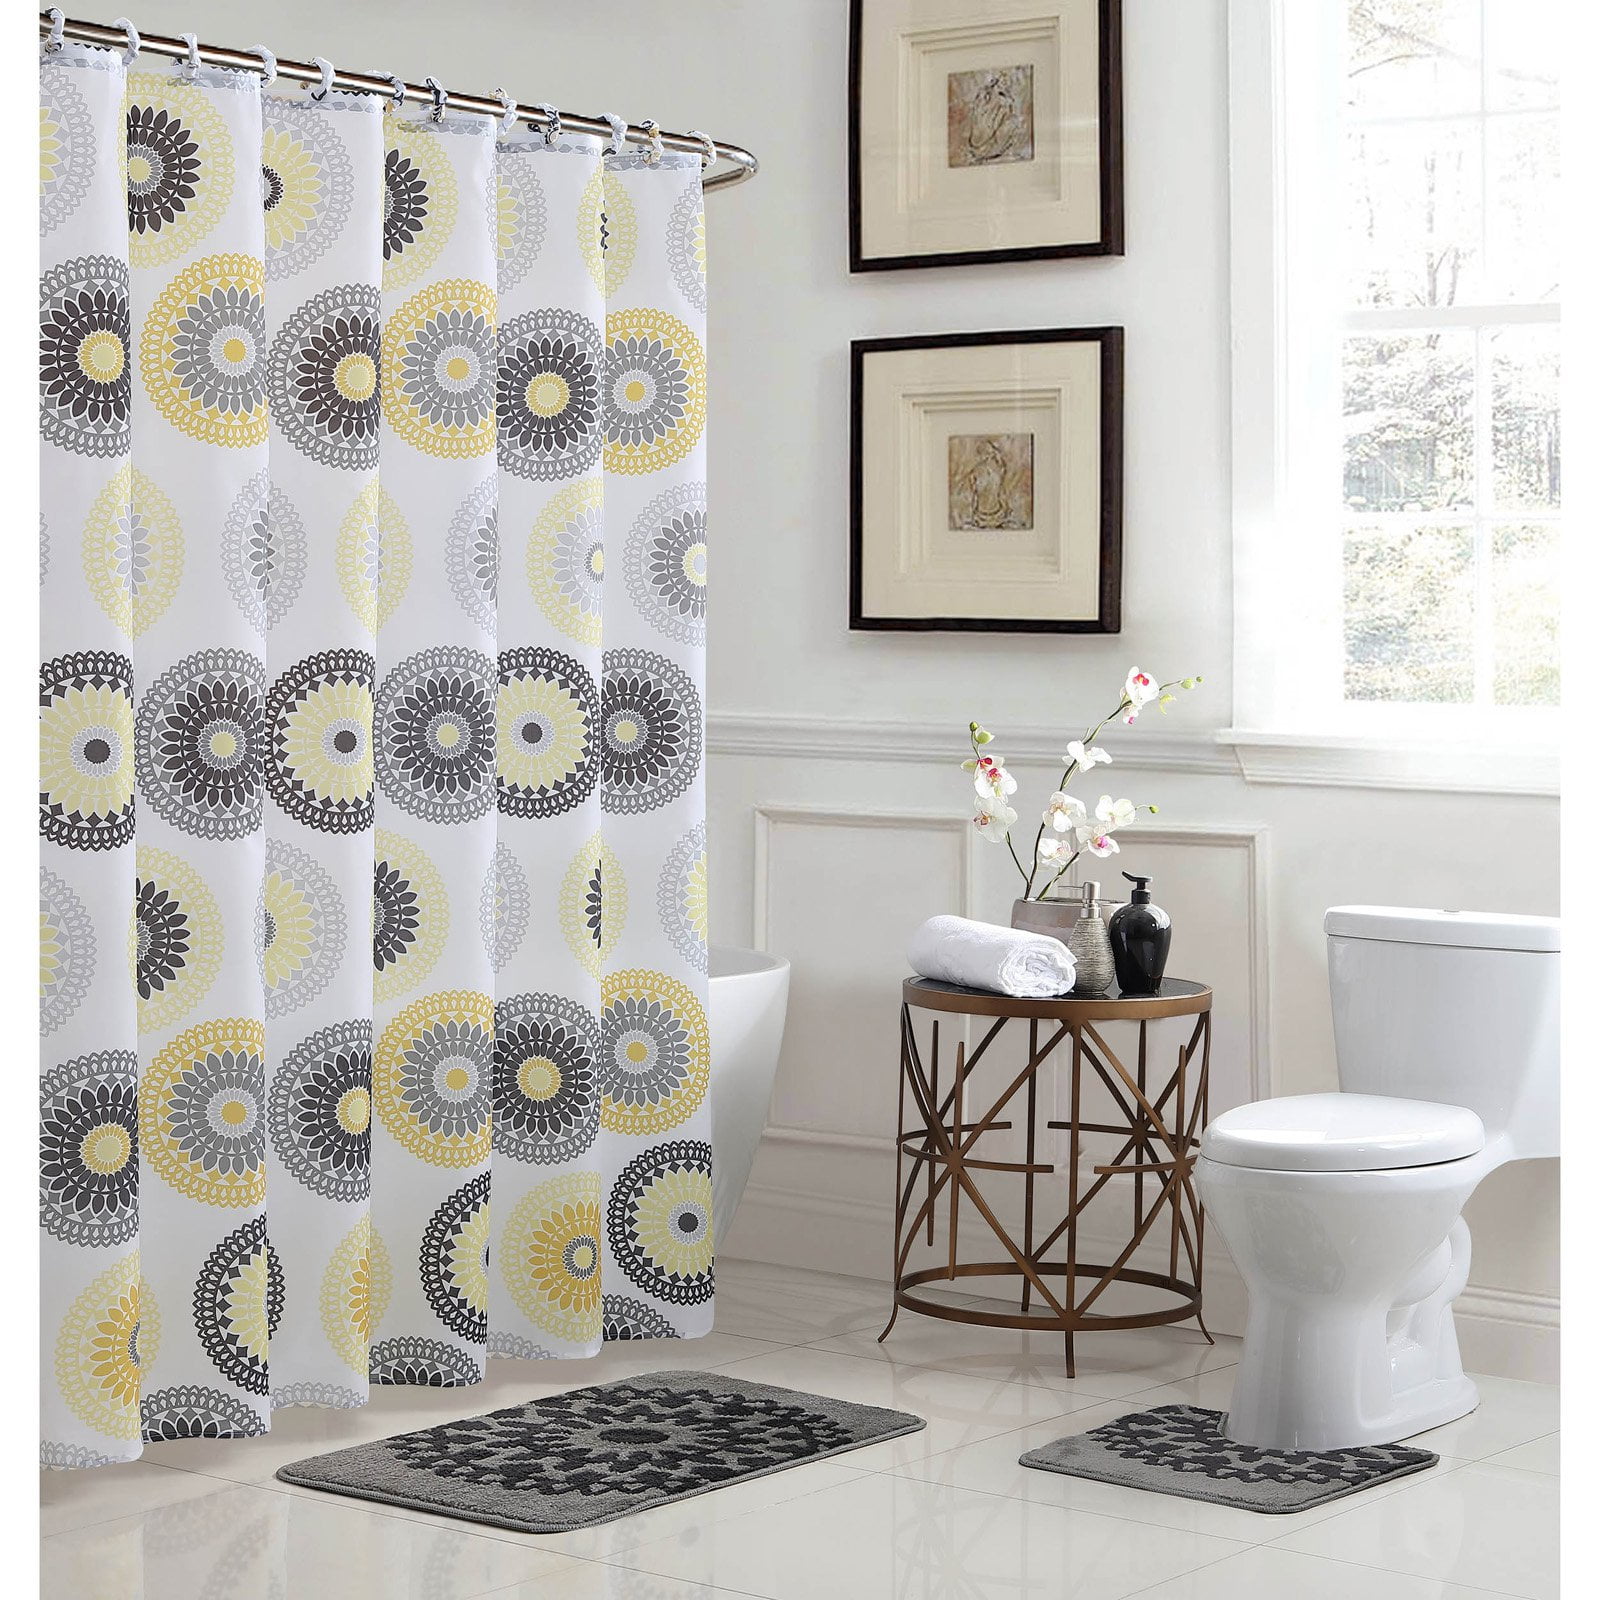 Details about   Waterproof Shower Curtain Family Tree Pattern Bathroom Decor 180X180cm 150X180cm 